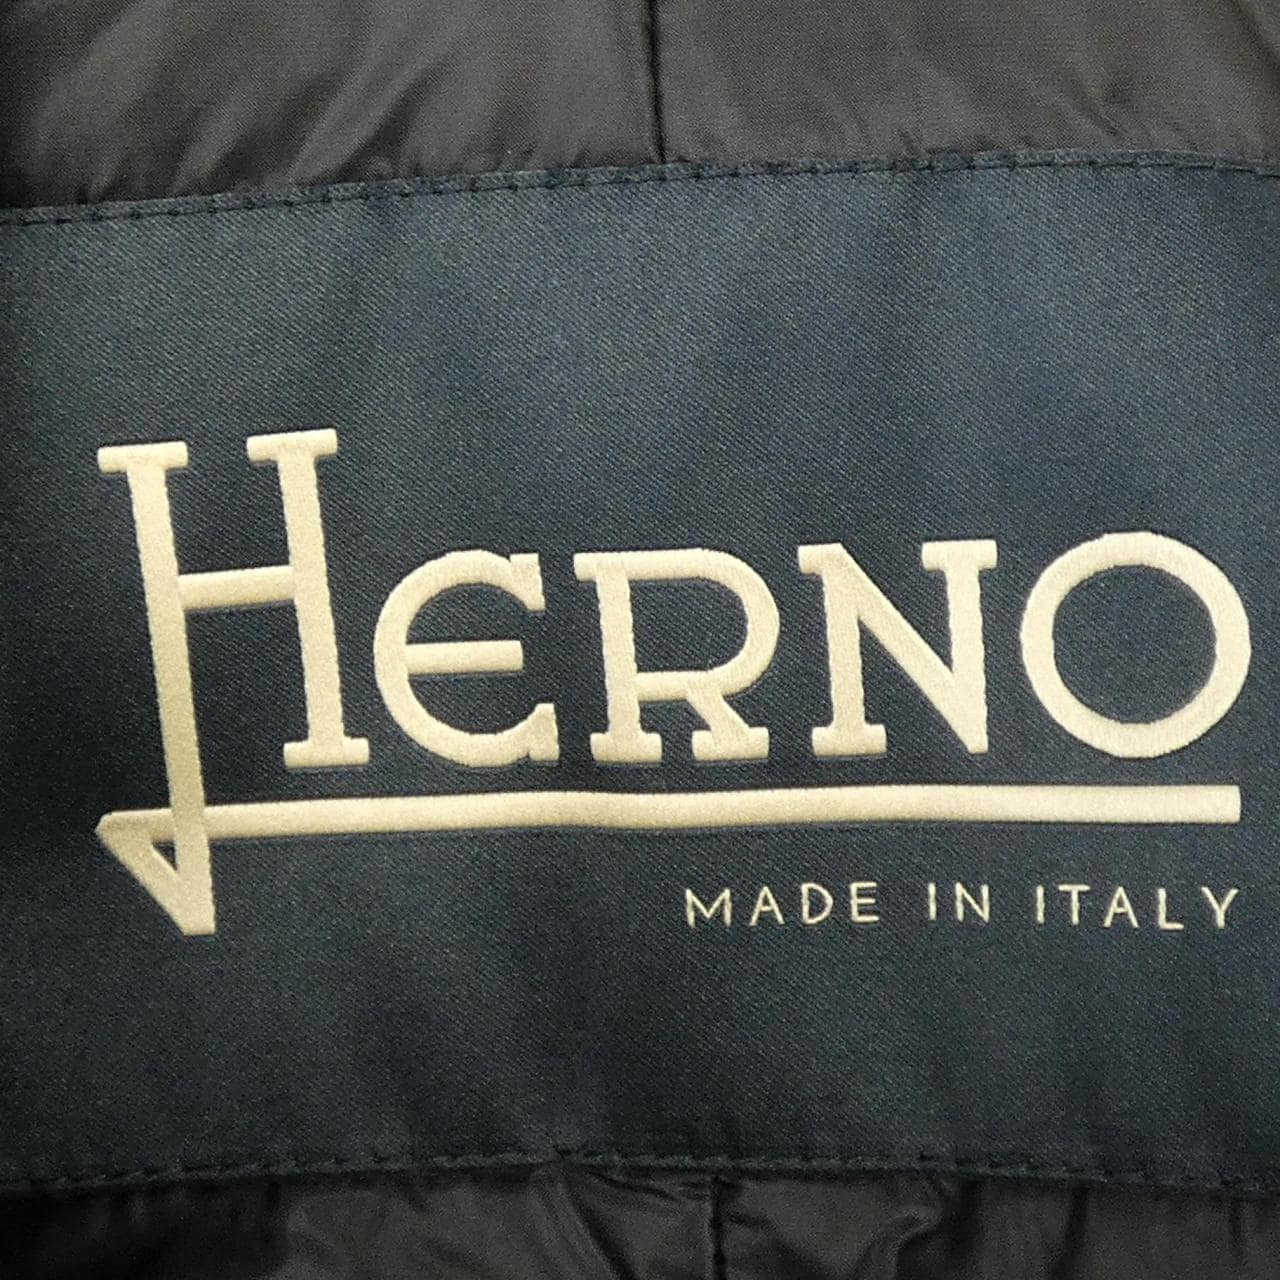 Herno down coat